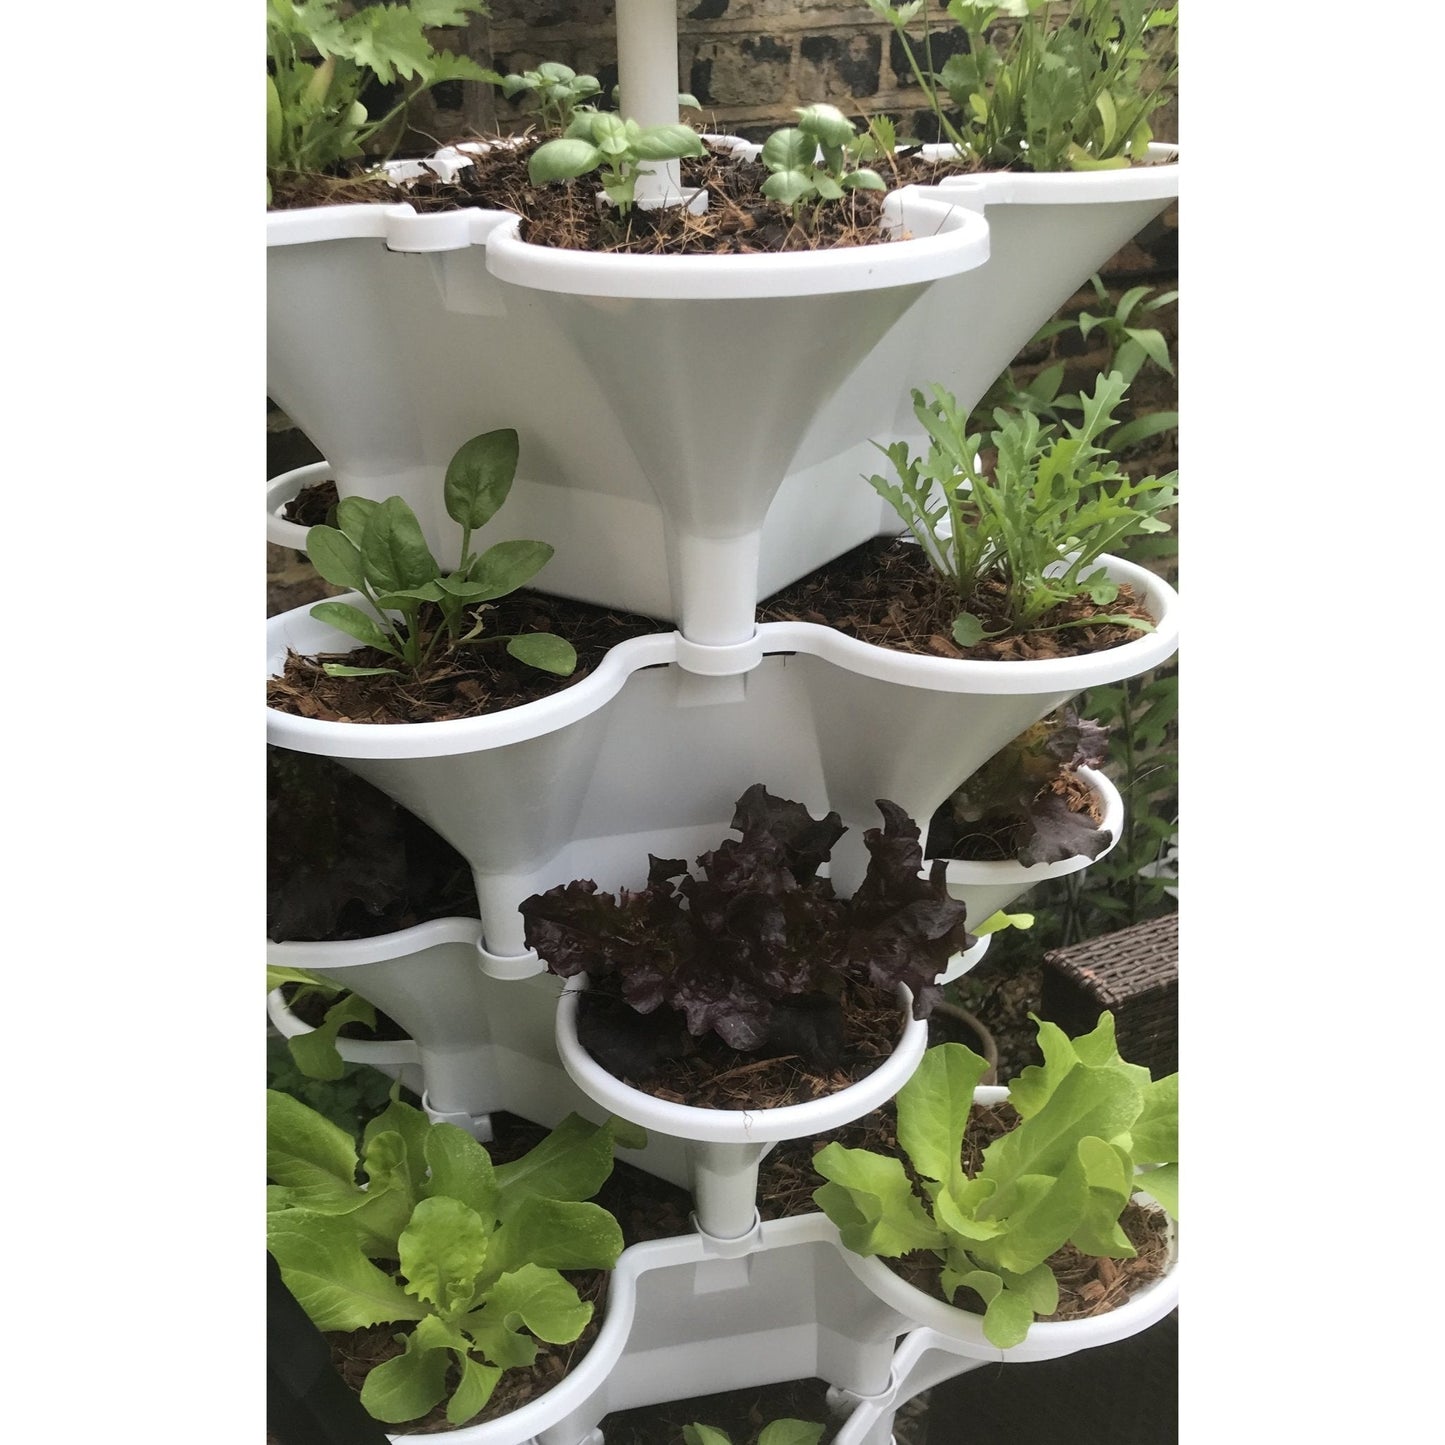 Acqua Garden - Self-Watering Vertical Growing System - AcquaGarden